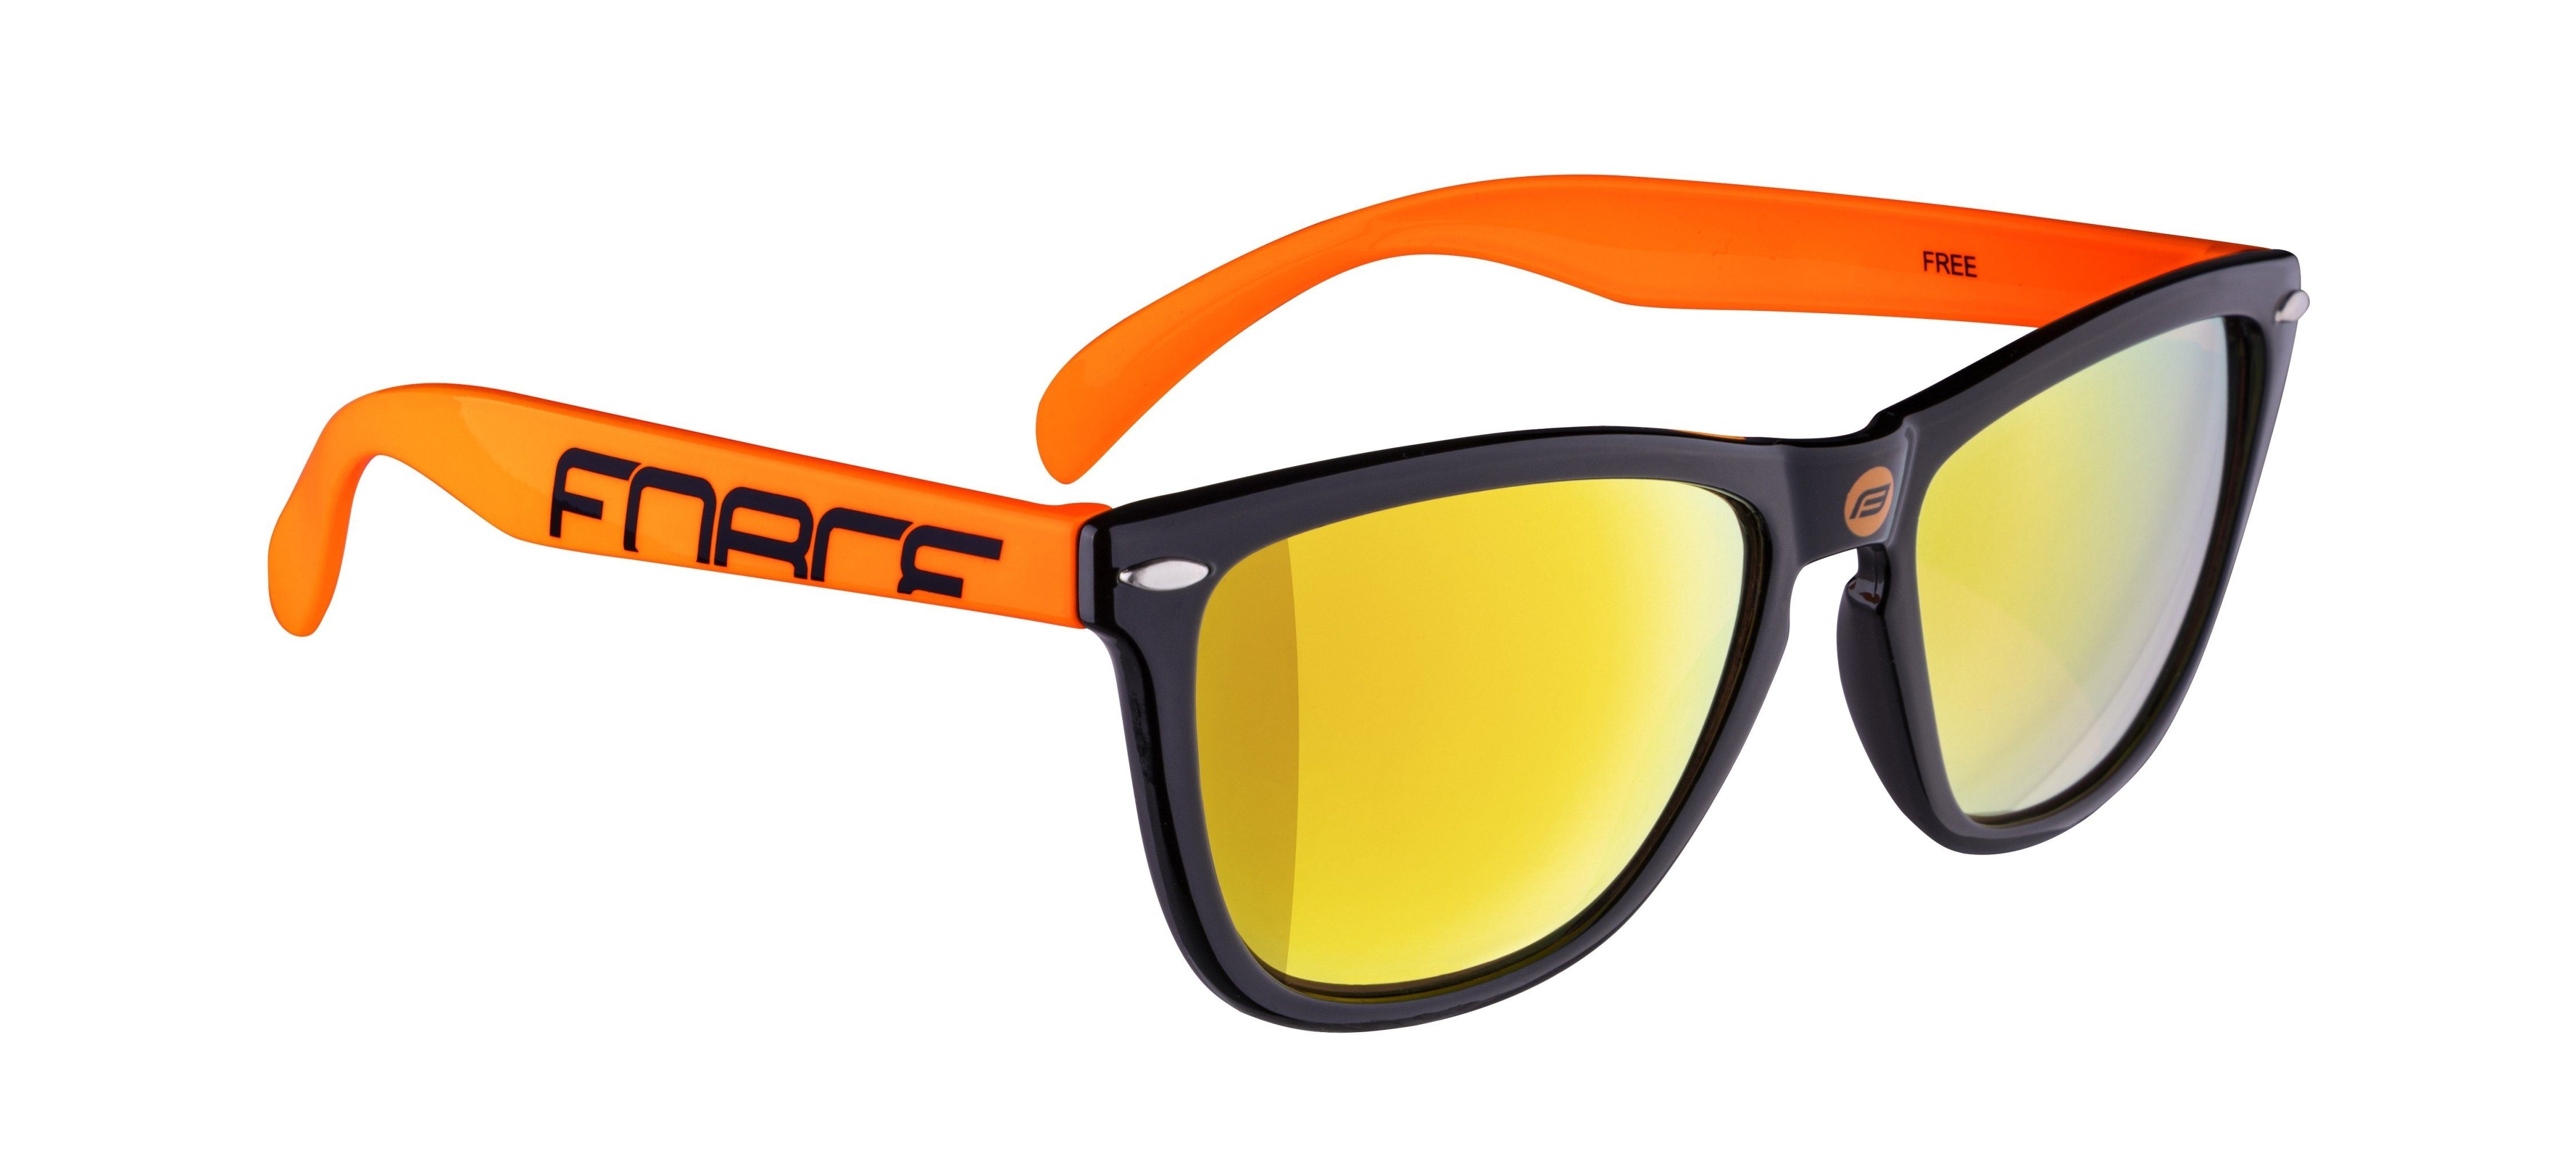 Fahrradbrille Sonnenbrille FREE FORCE FORCE schwarz-orange